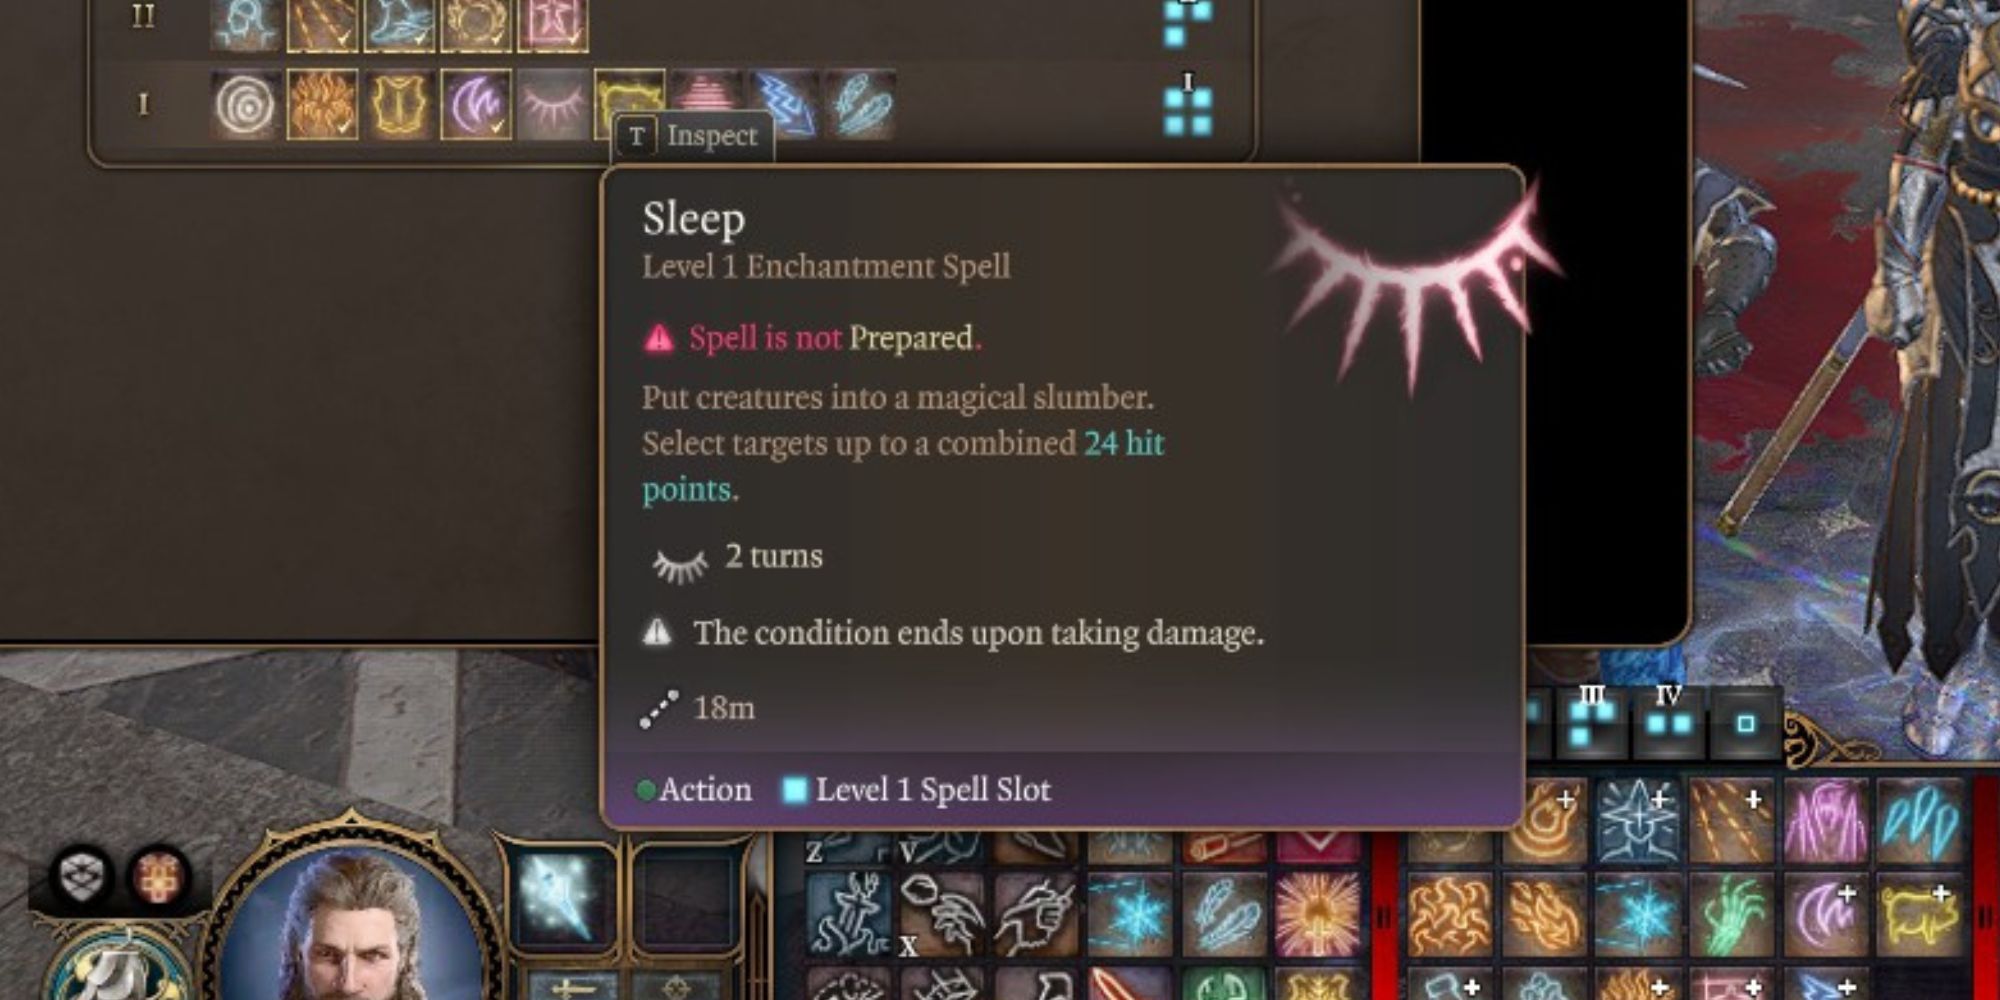 The Sleep spell in Baldur's Gate 3